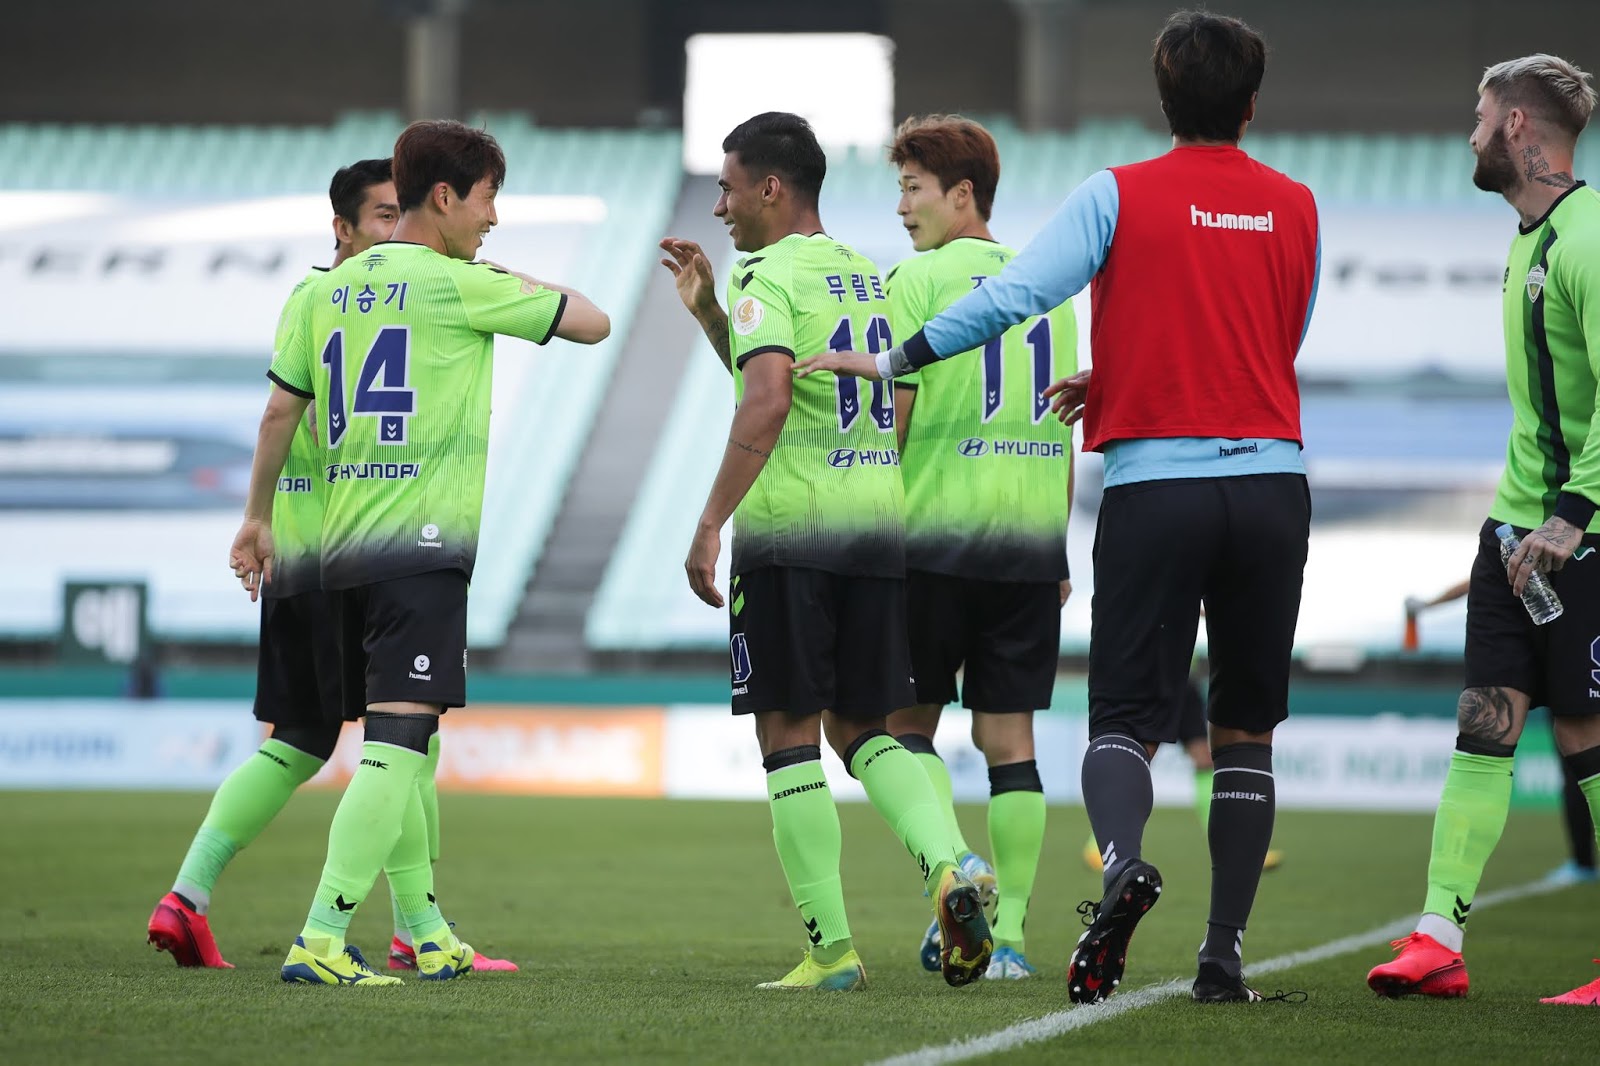 Preview Jeonbuk Hyundai Motors Vs Incheon United K League United South Korean Football News Opinions Match Previews And Score Predictions